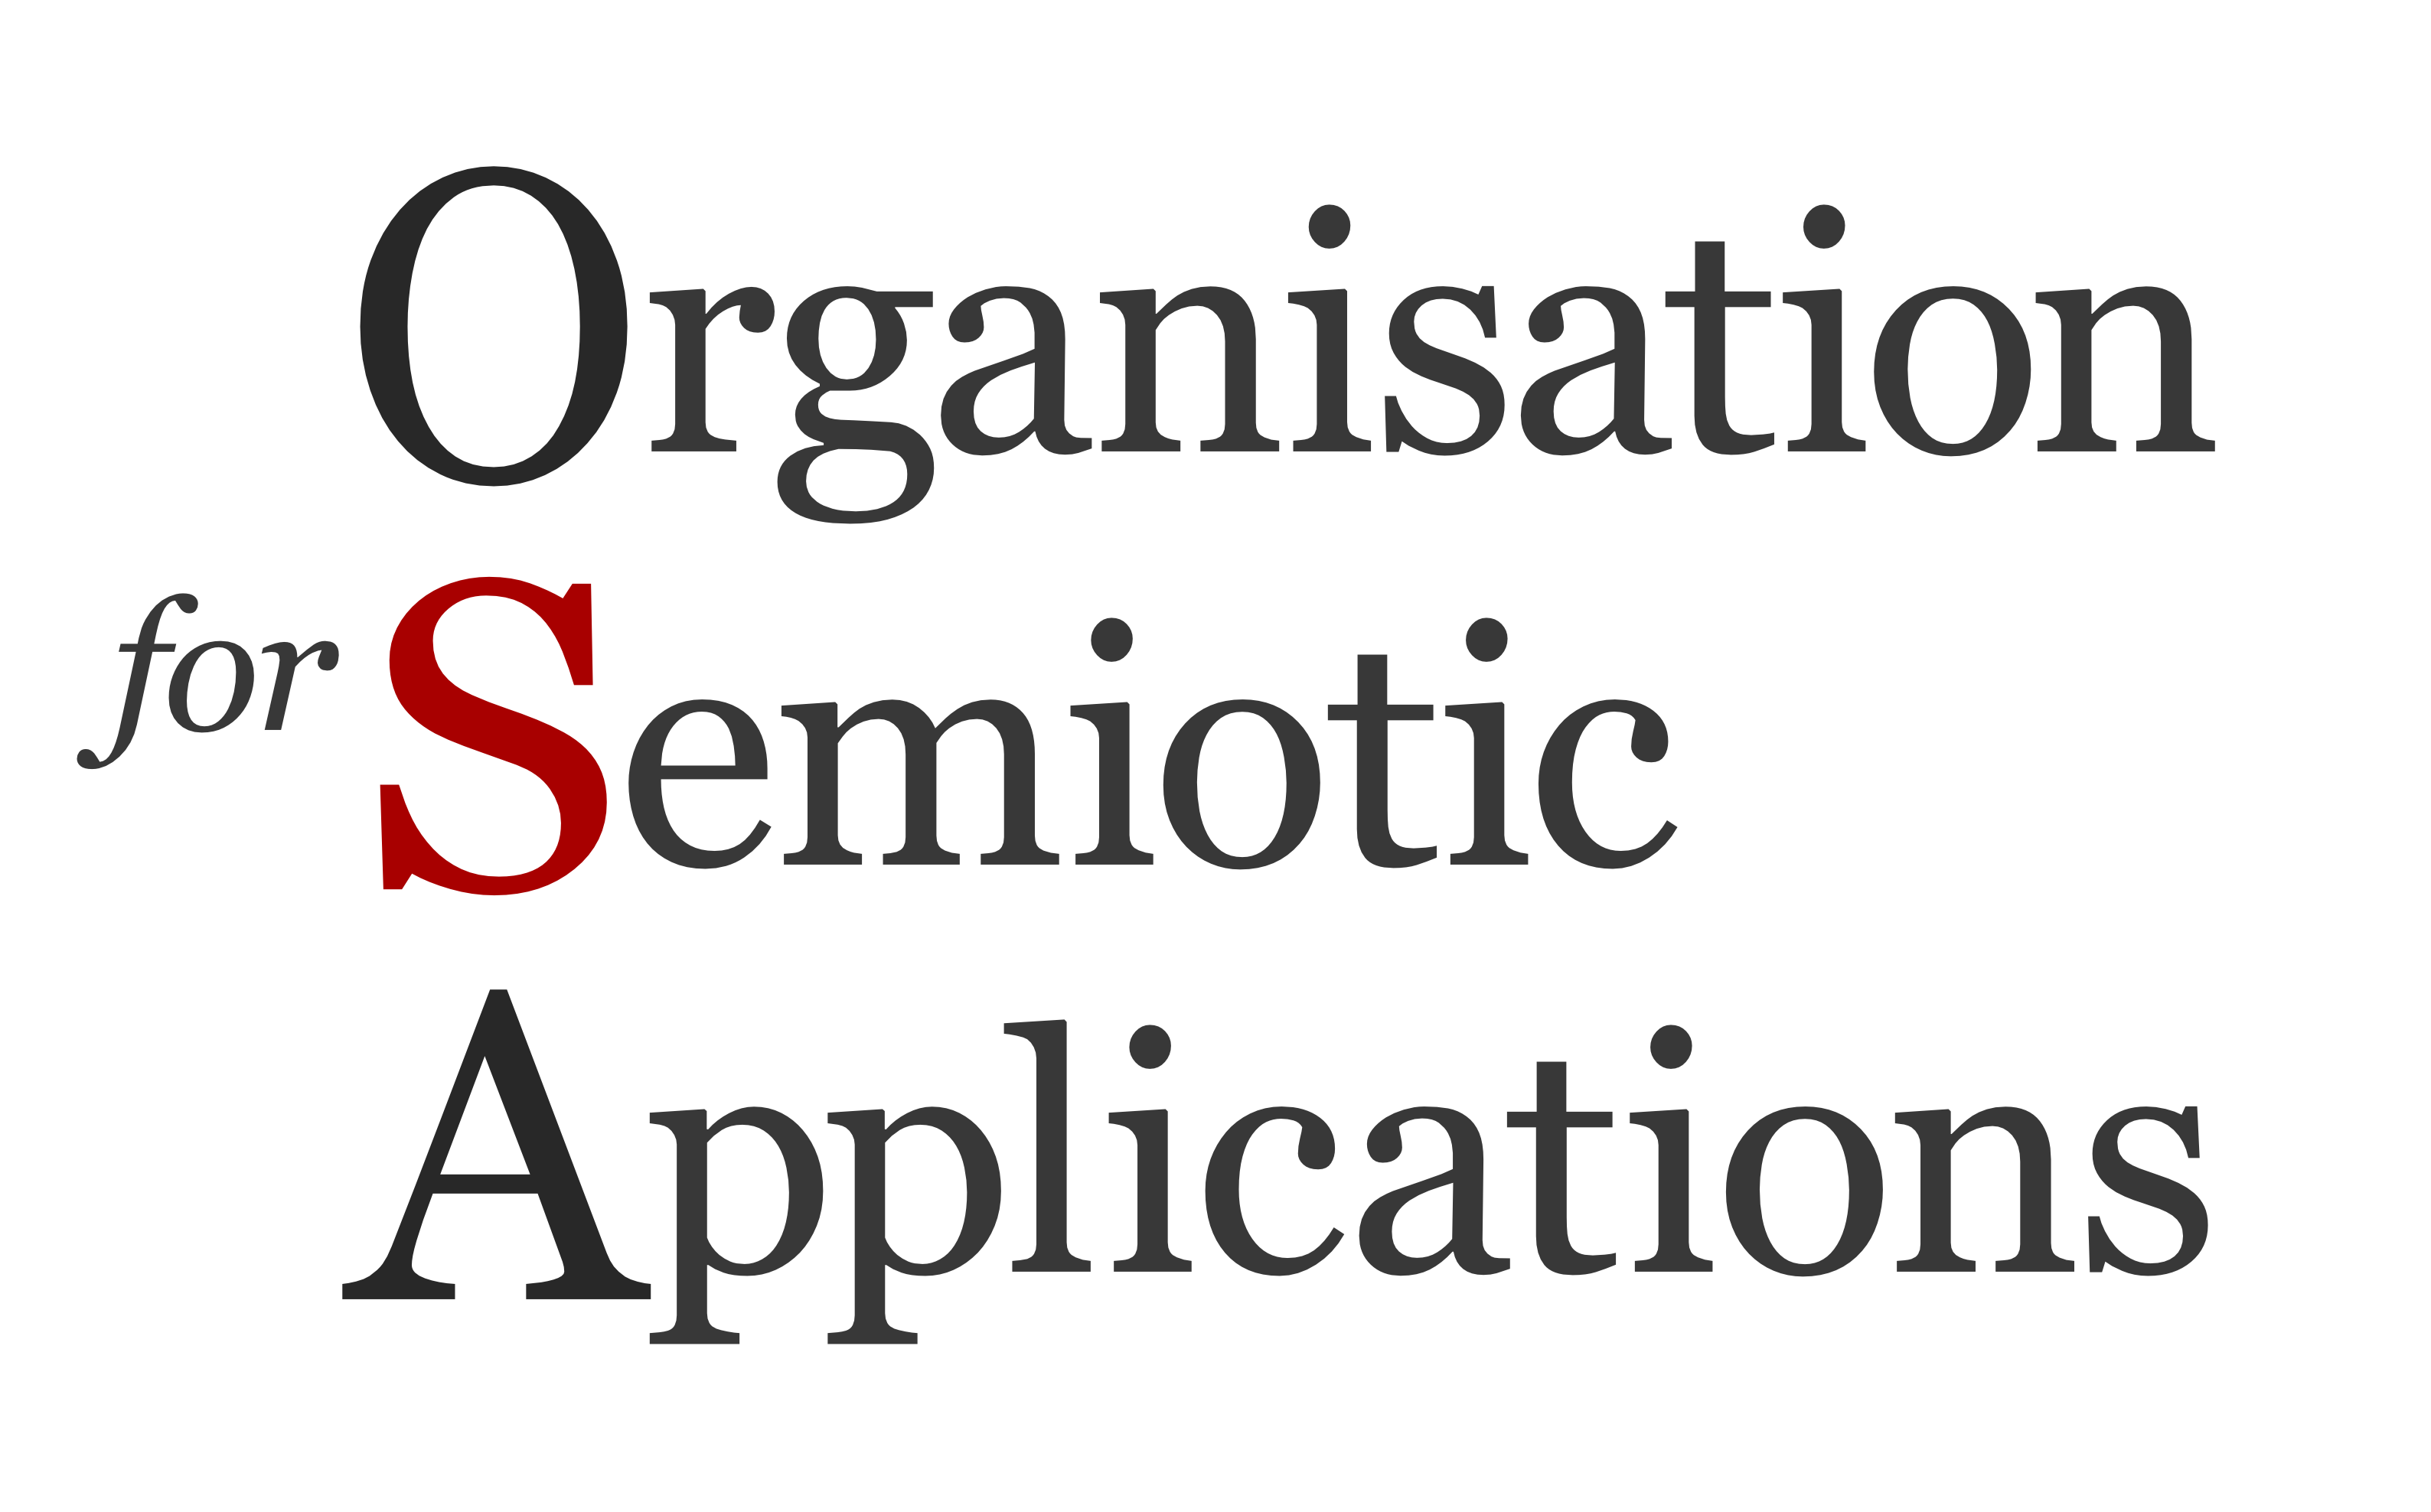 Organization for Semiotic Applications